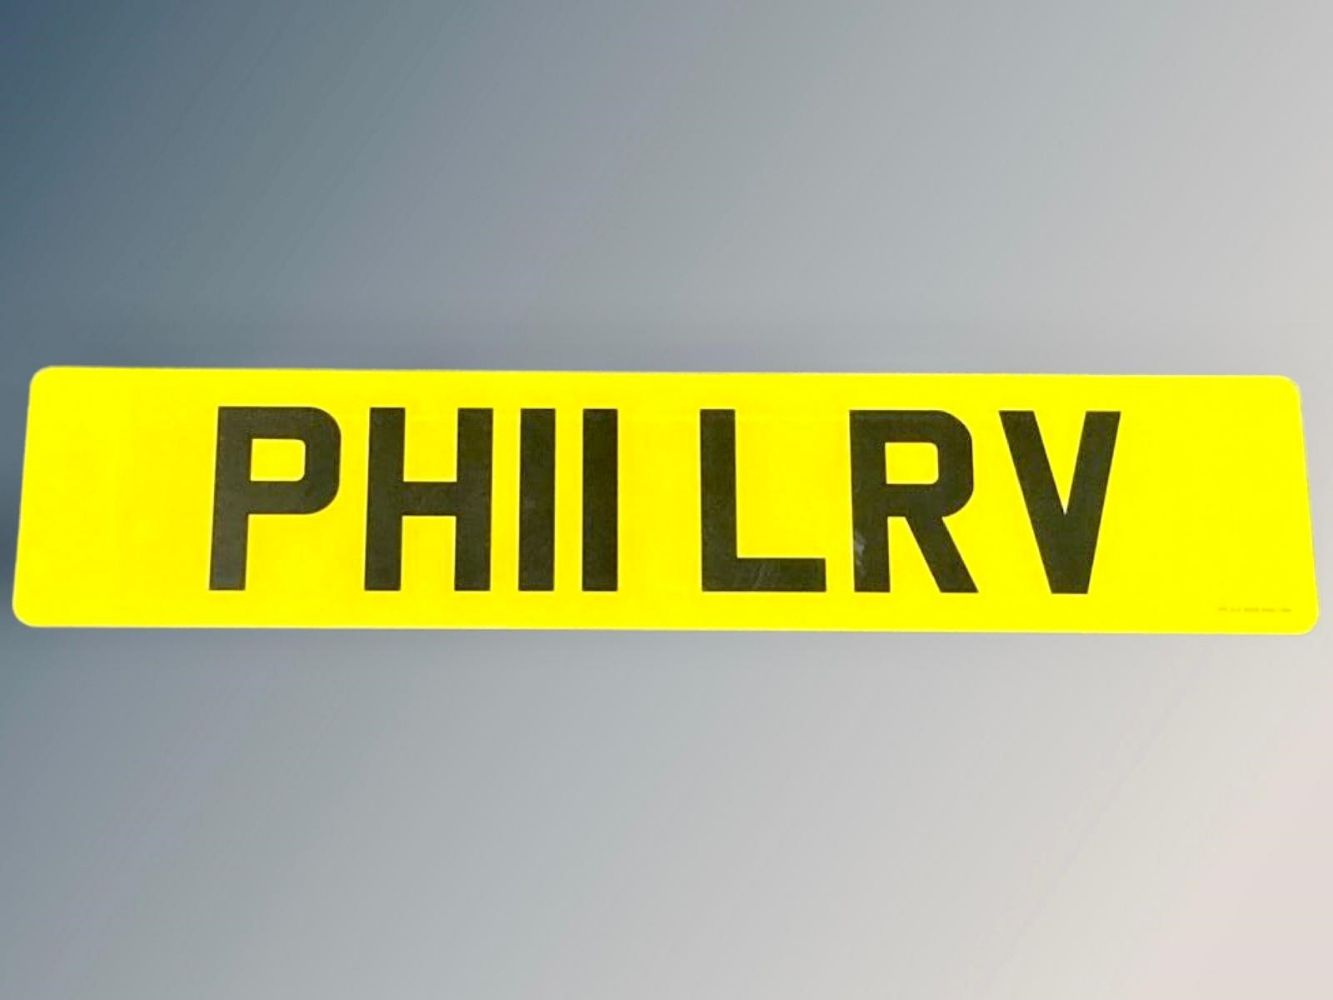 Cherished registration plate - PH11 LRV